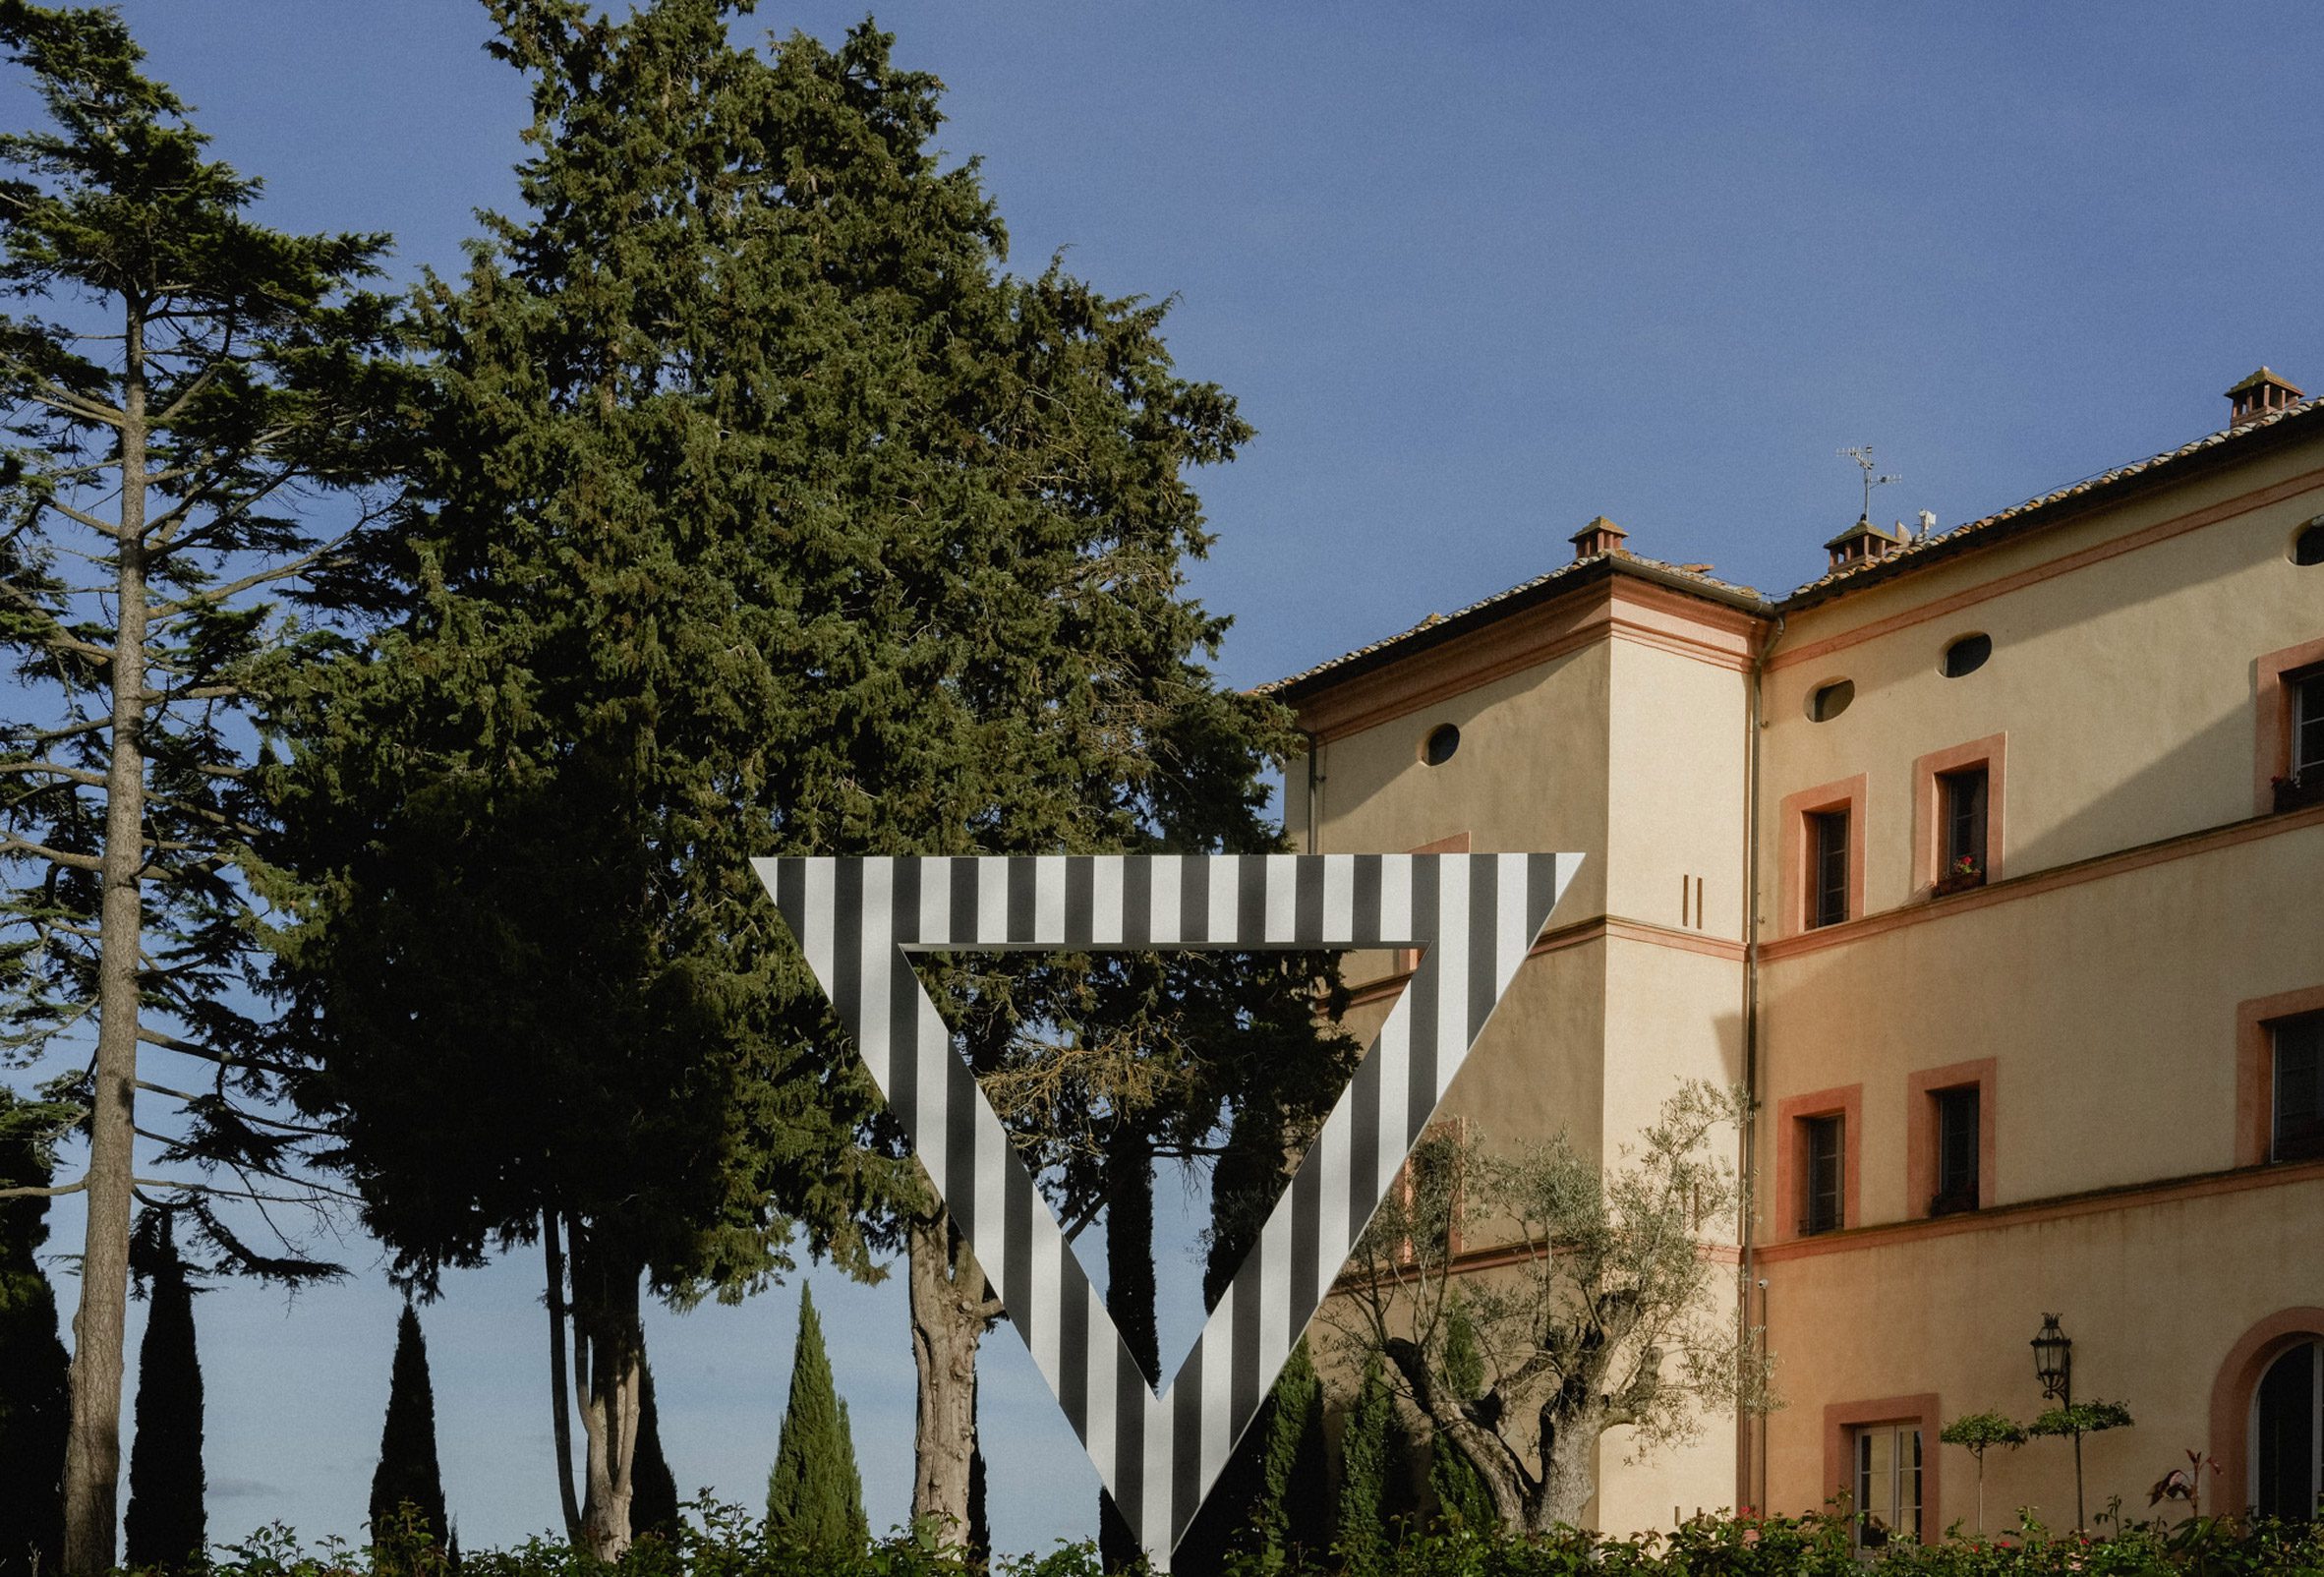 Haltes Colorées installation by Daniel Buren at Castello di Casole, a Belmond hotel in Tuscany